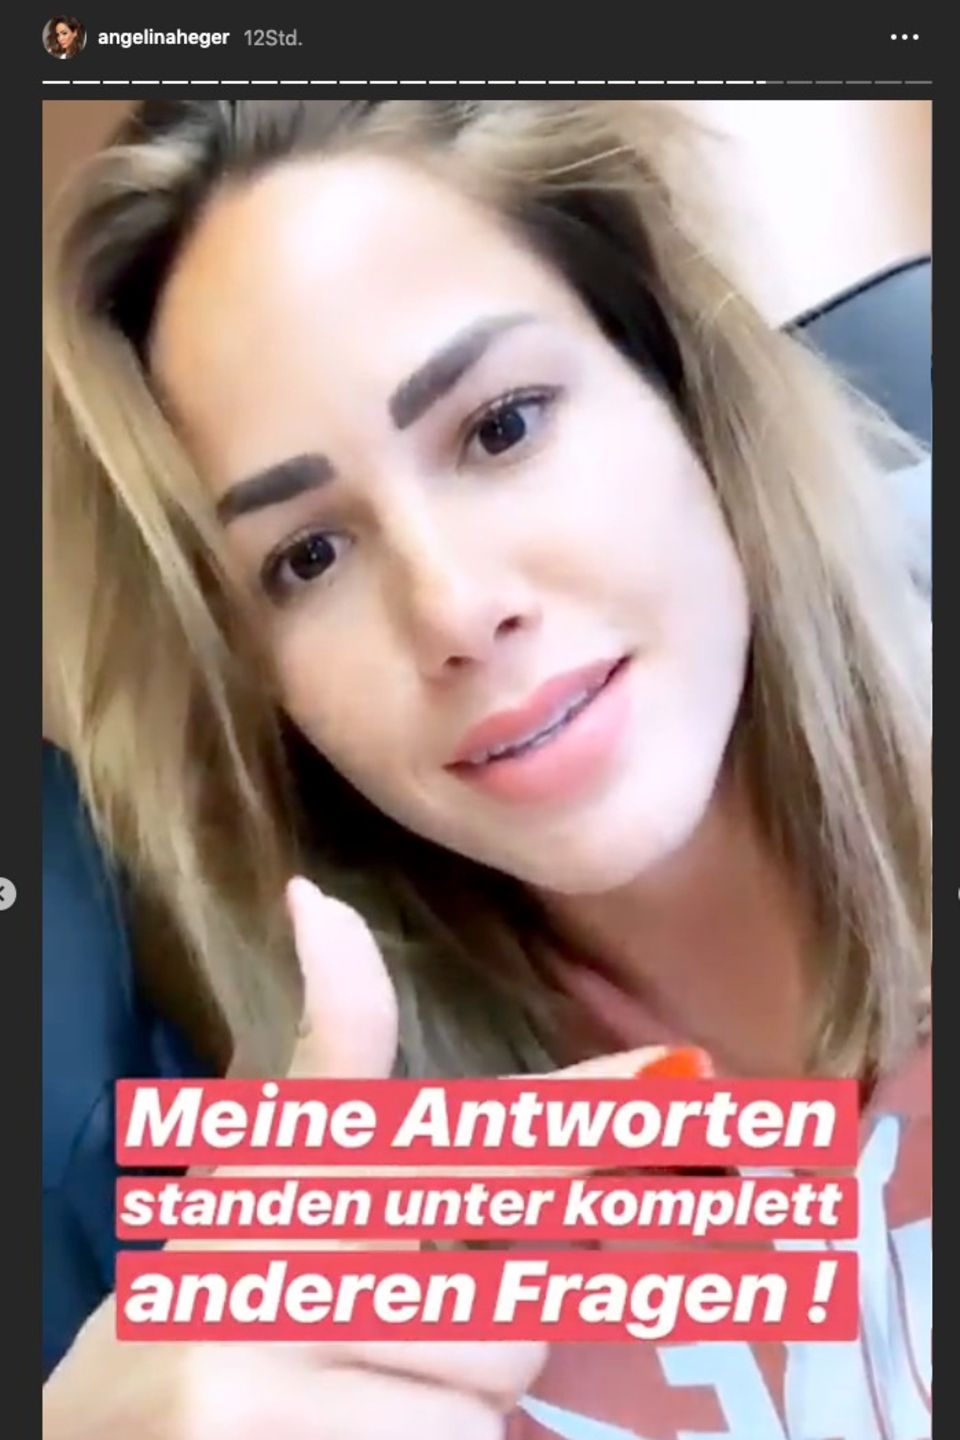 Angelina Heger erklärt den Fauxpas in ihrer Instagram-Story